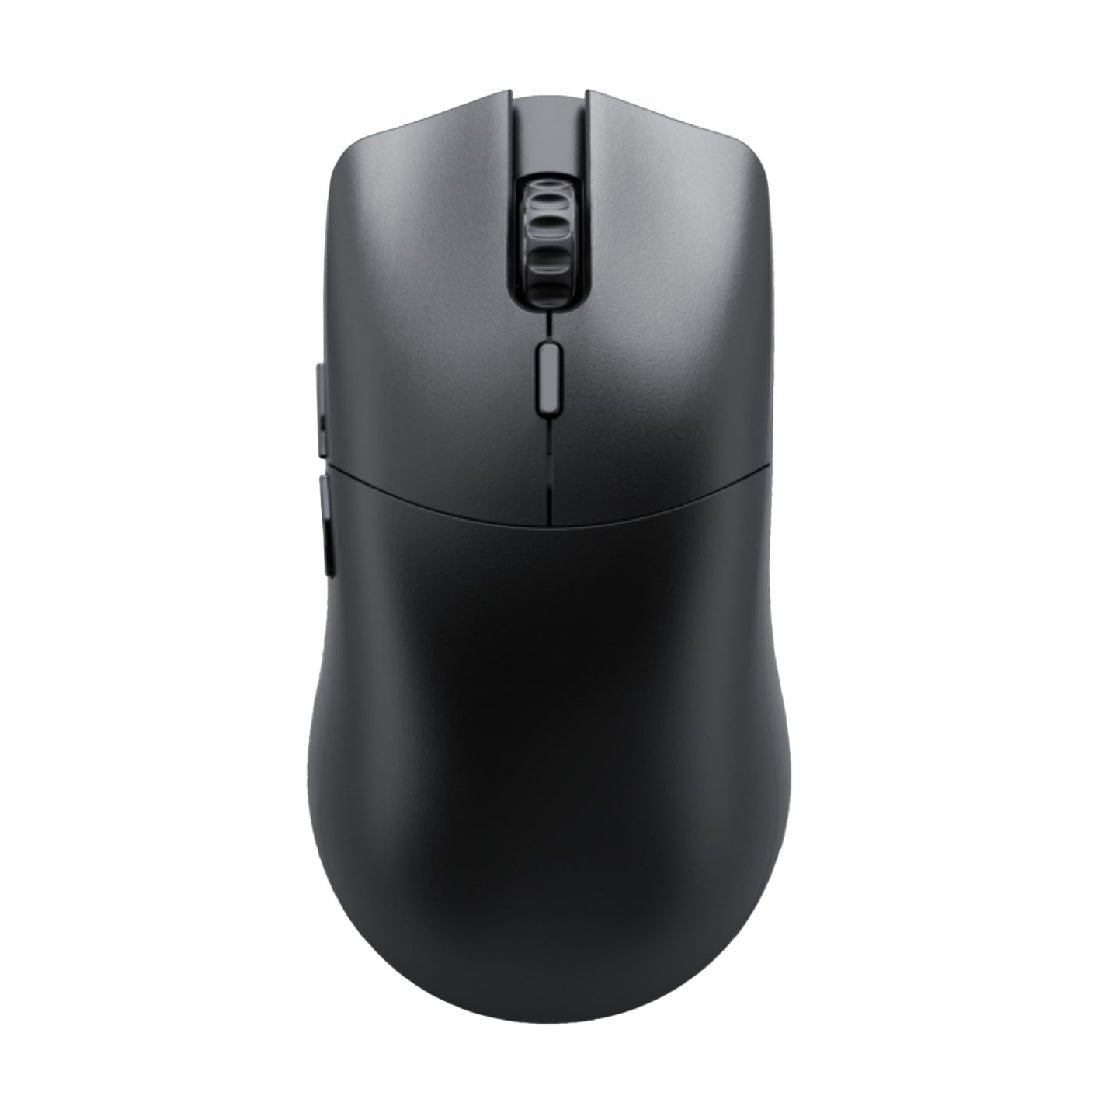 Glorious Model O 2 PRO 1K Polling Wireless Gaming Mouse - Black - فأرة - Store 974 | ستور ٩٧٤